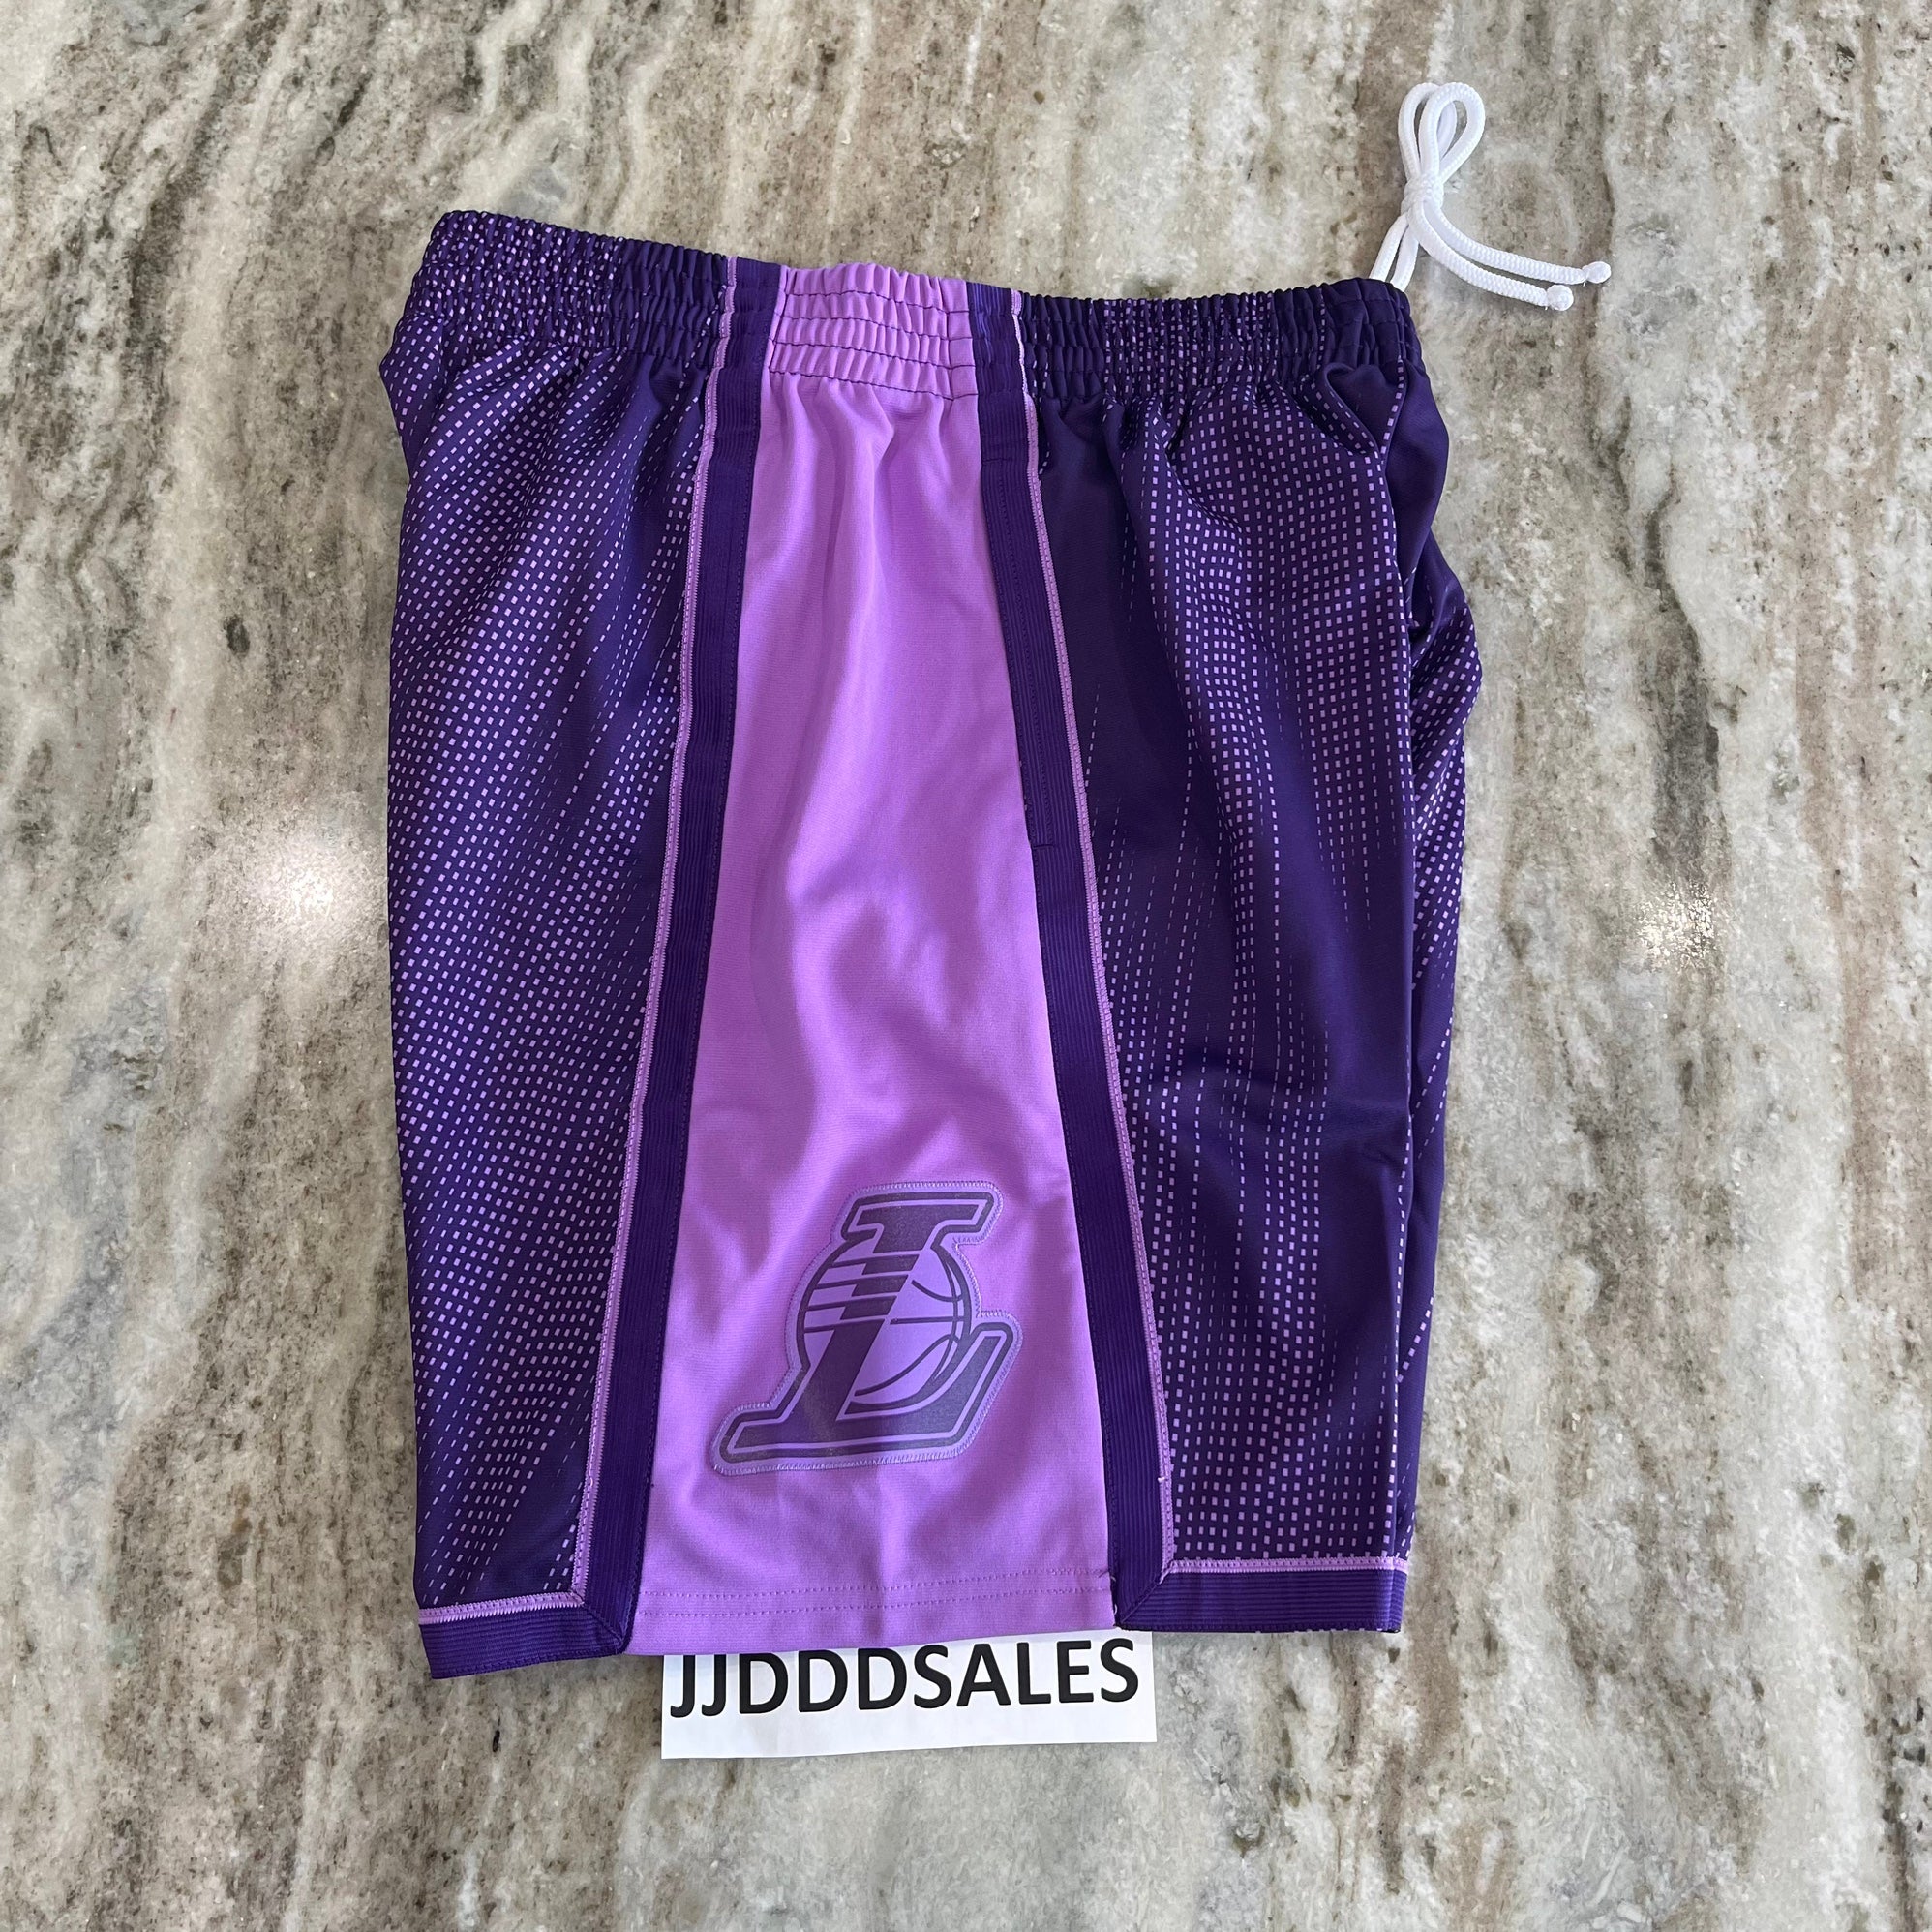 Official Los Angeles Lakers Nike Shorts, Basketball Shorts, Gym